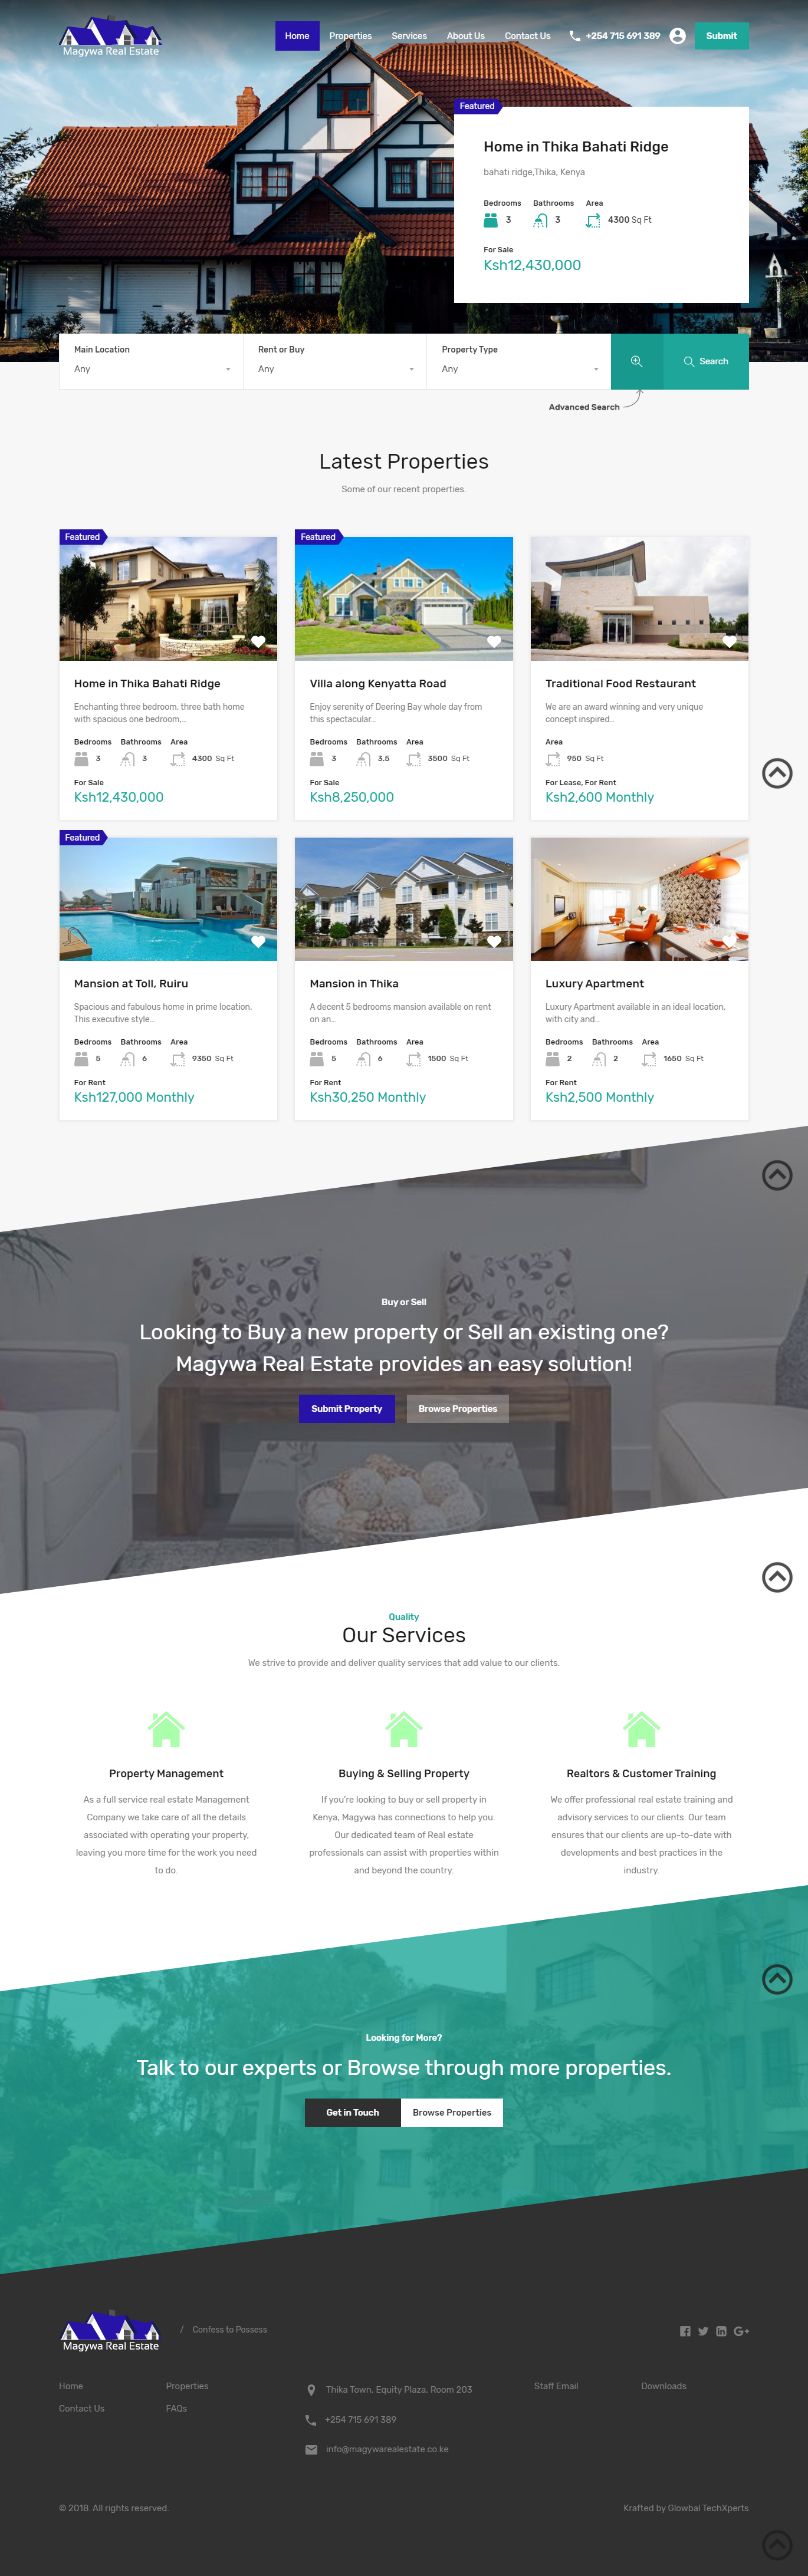 Magywa real estate website